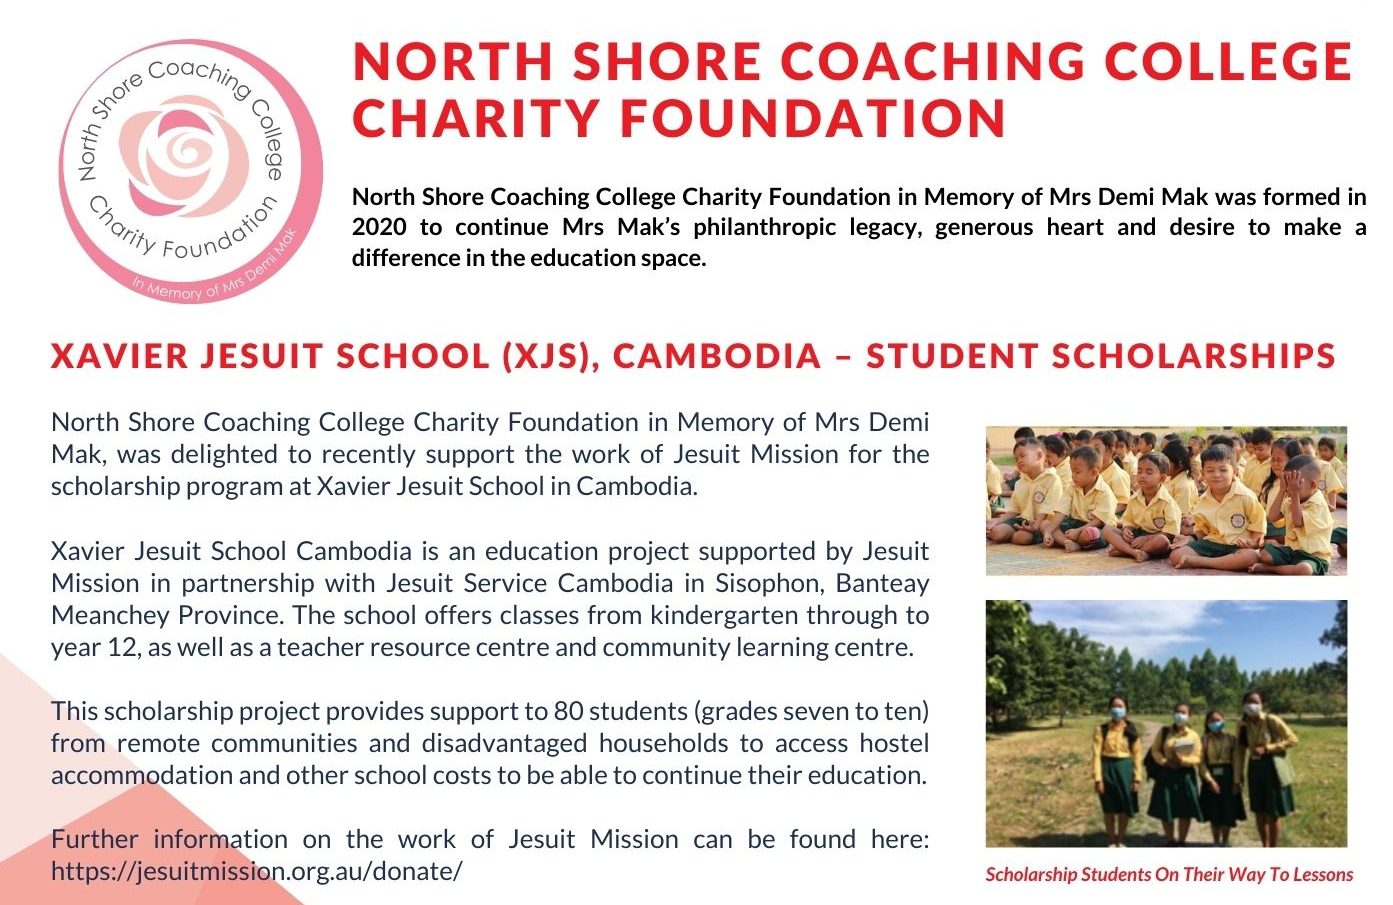 Jesuit Mission for the scholarship program at Xavier Jesuit School in Cambodia